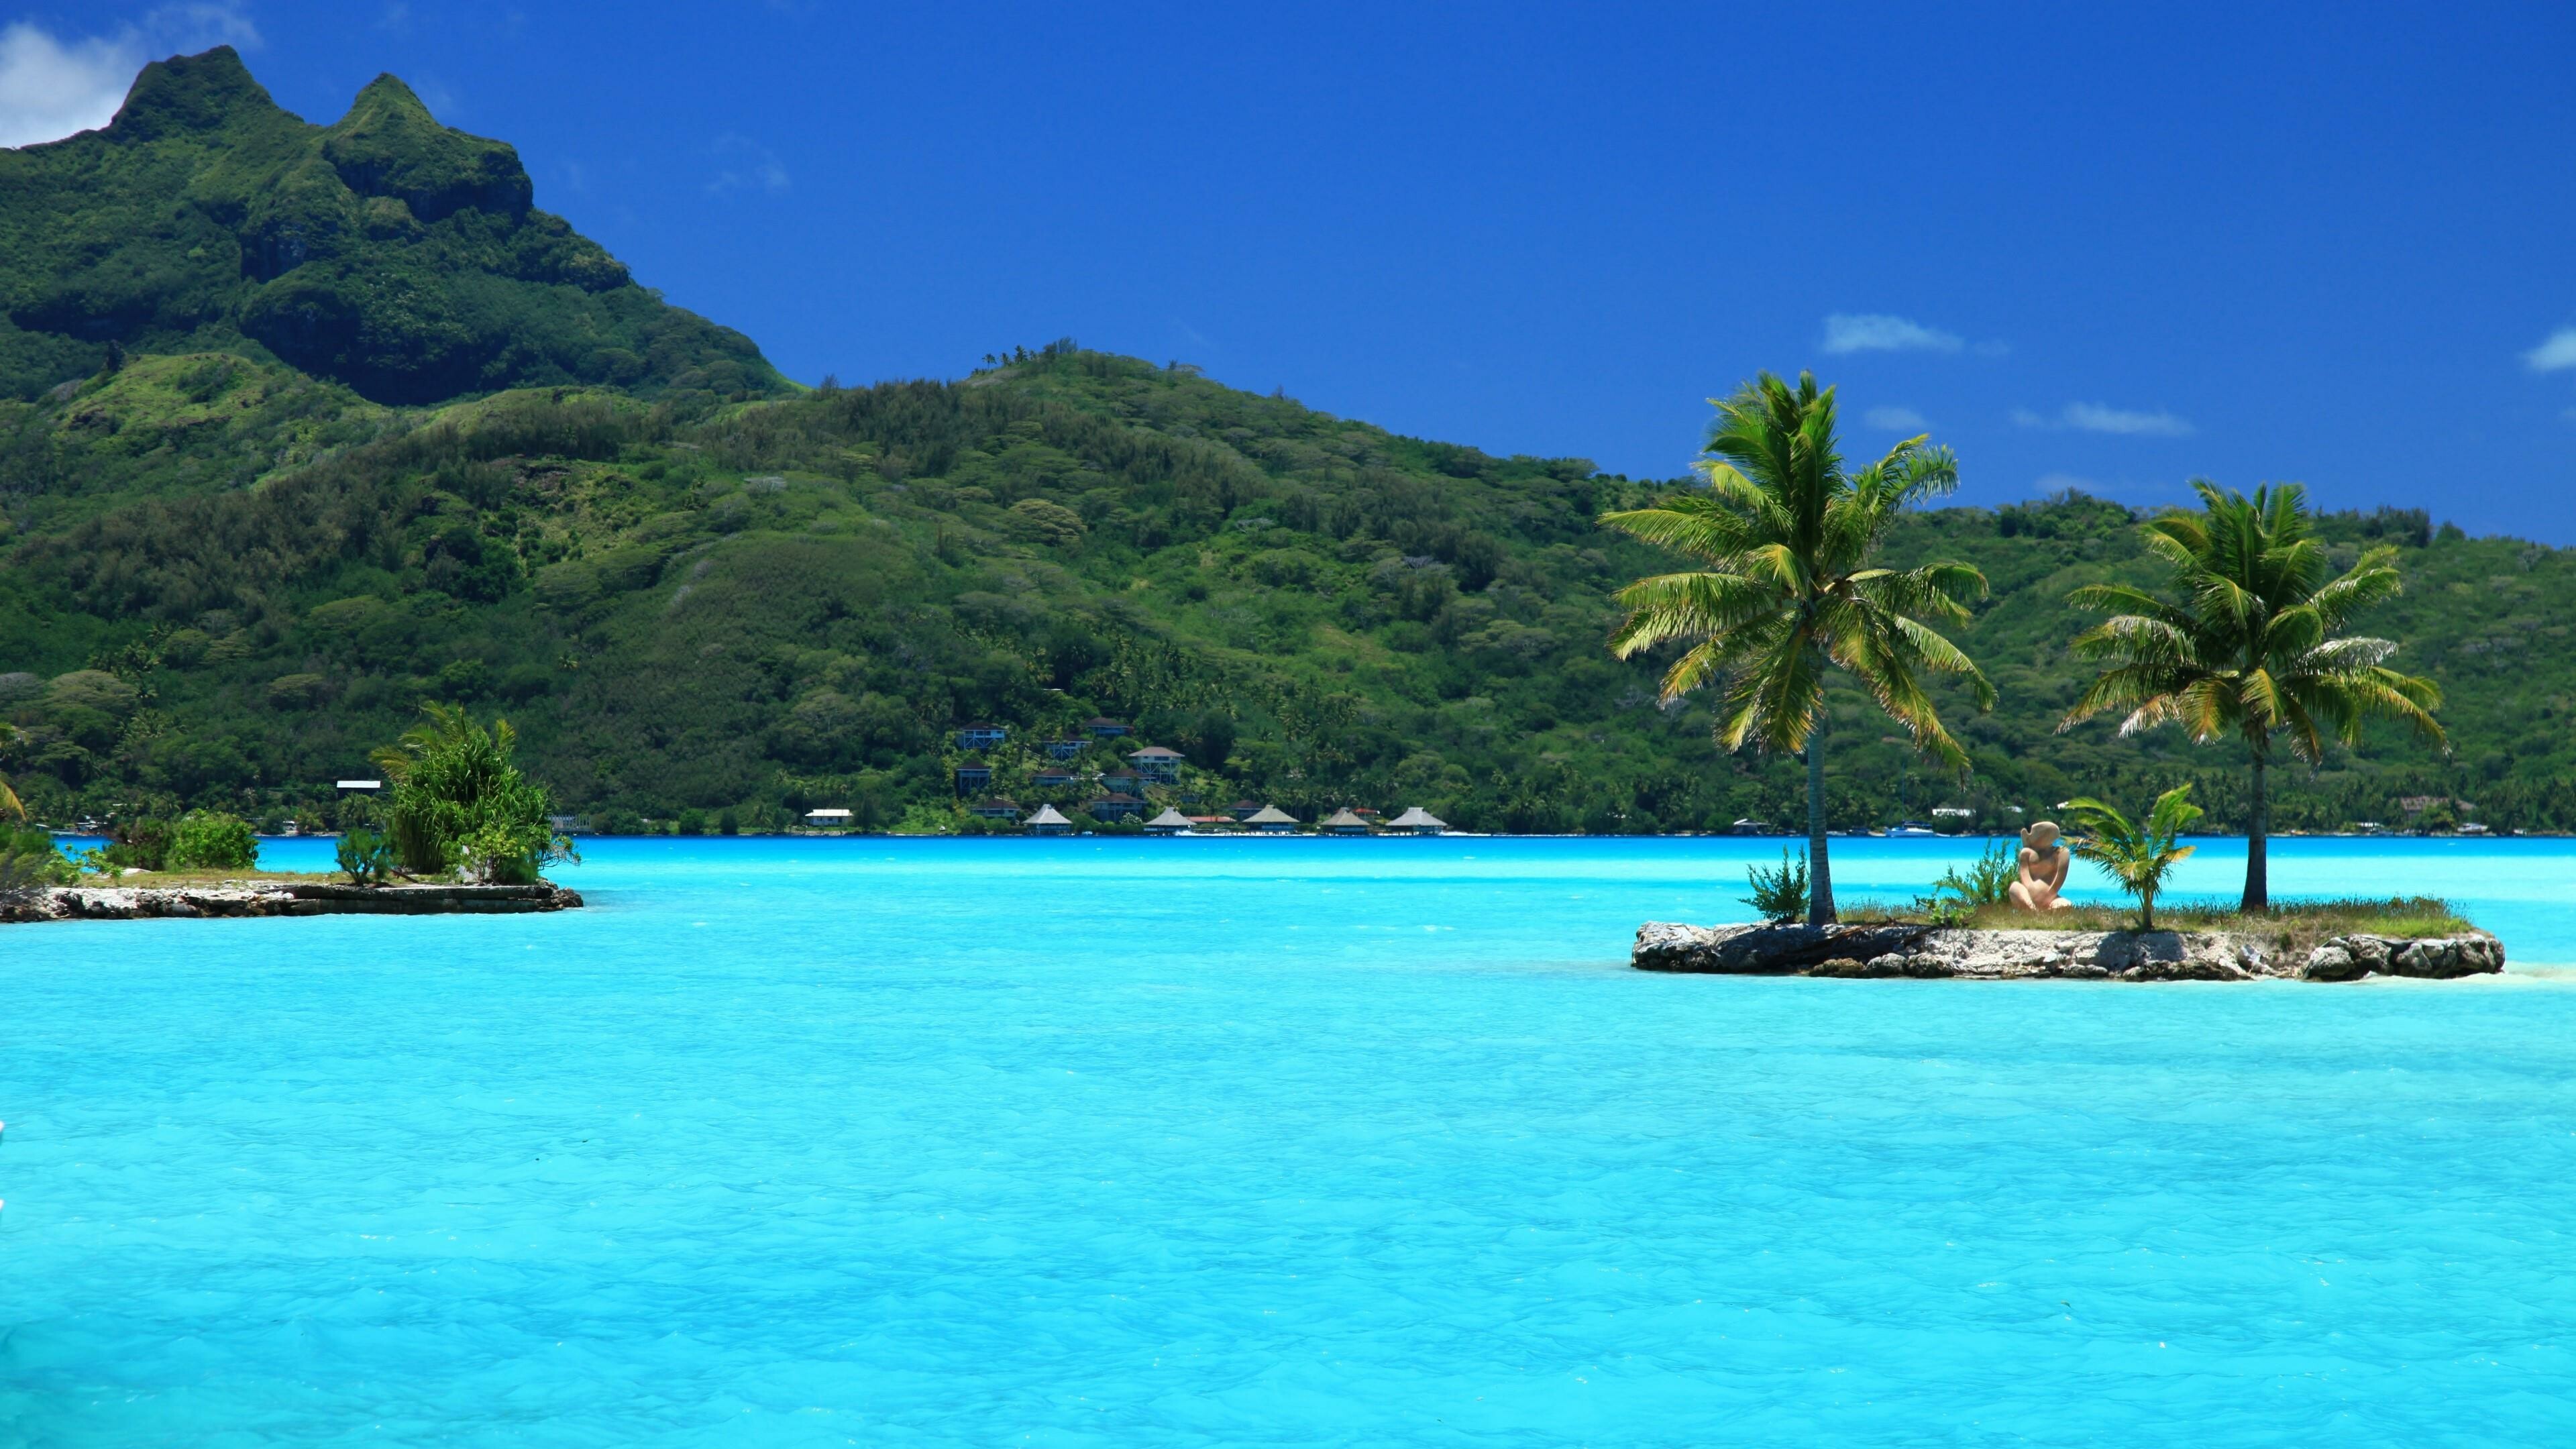 Tahiti: Bora Bora, An island group in the Leeward Islands. 3840x2160 4K Wallpaper.